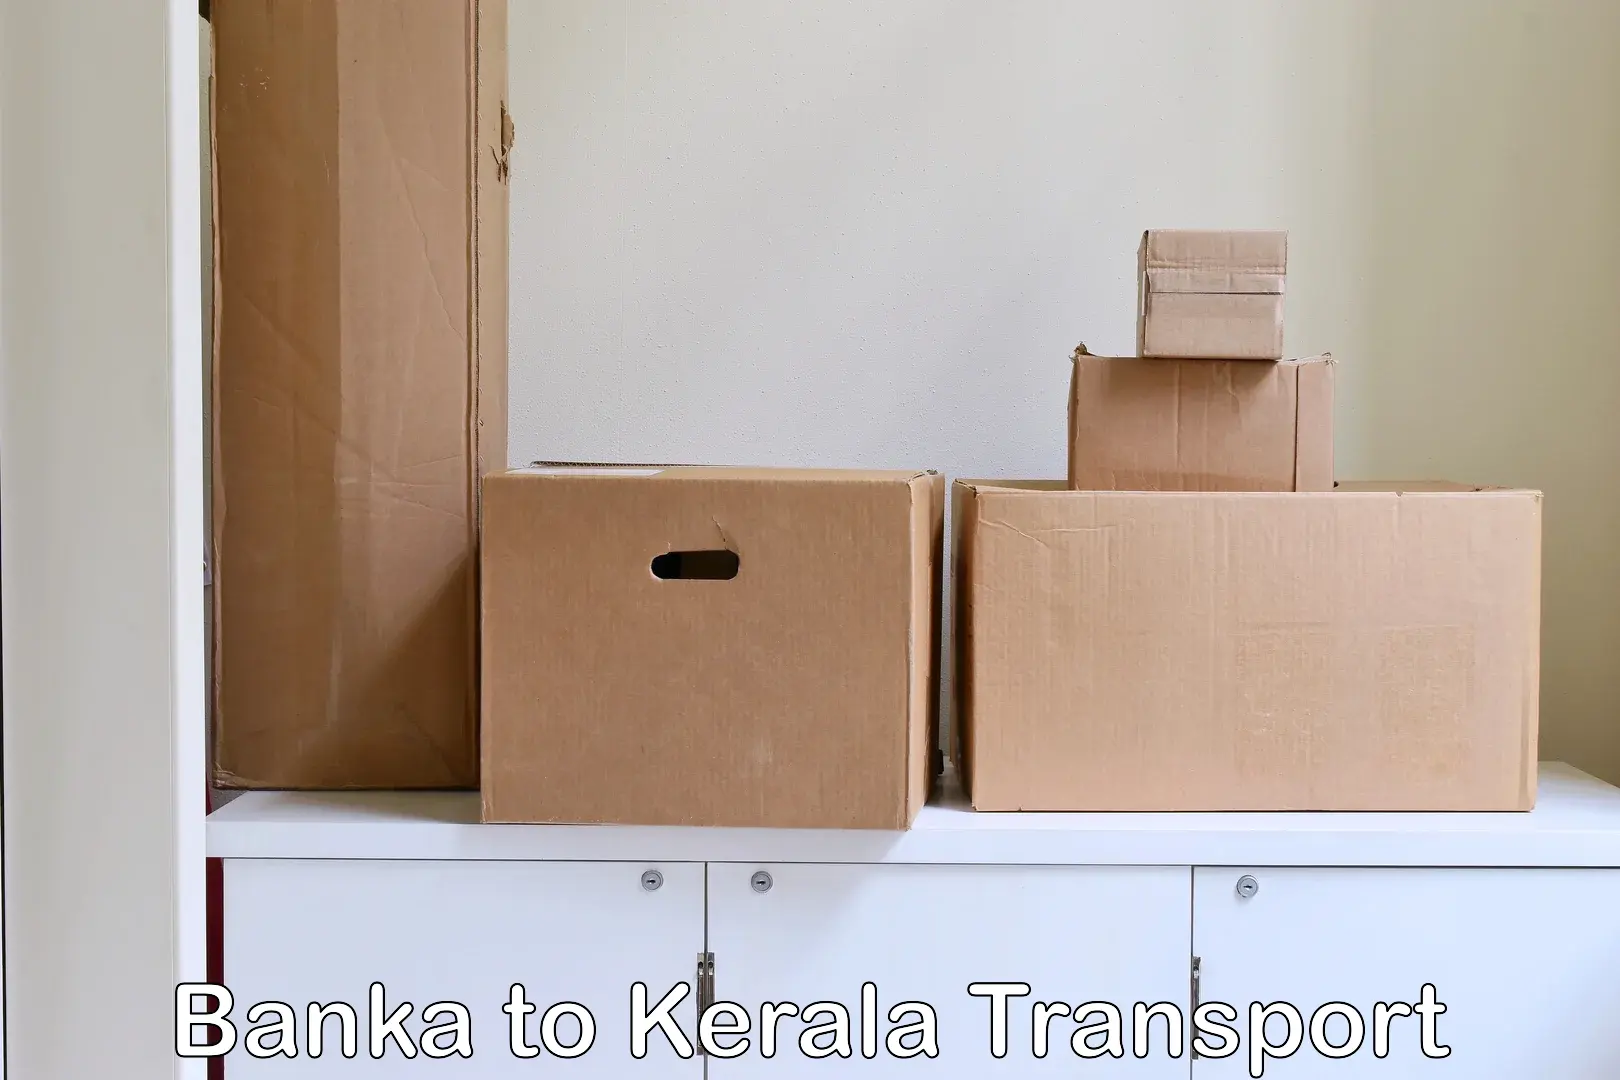 Transport shared services Banka to Kerala